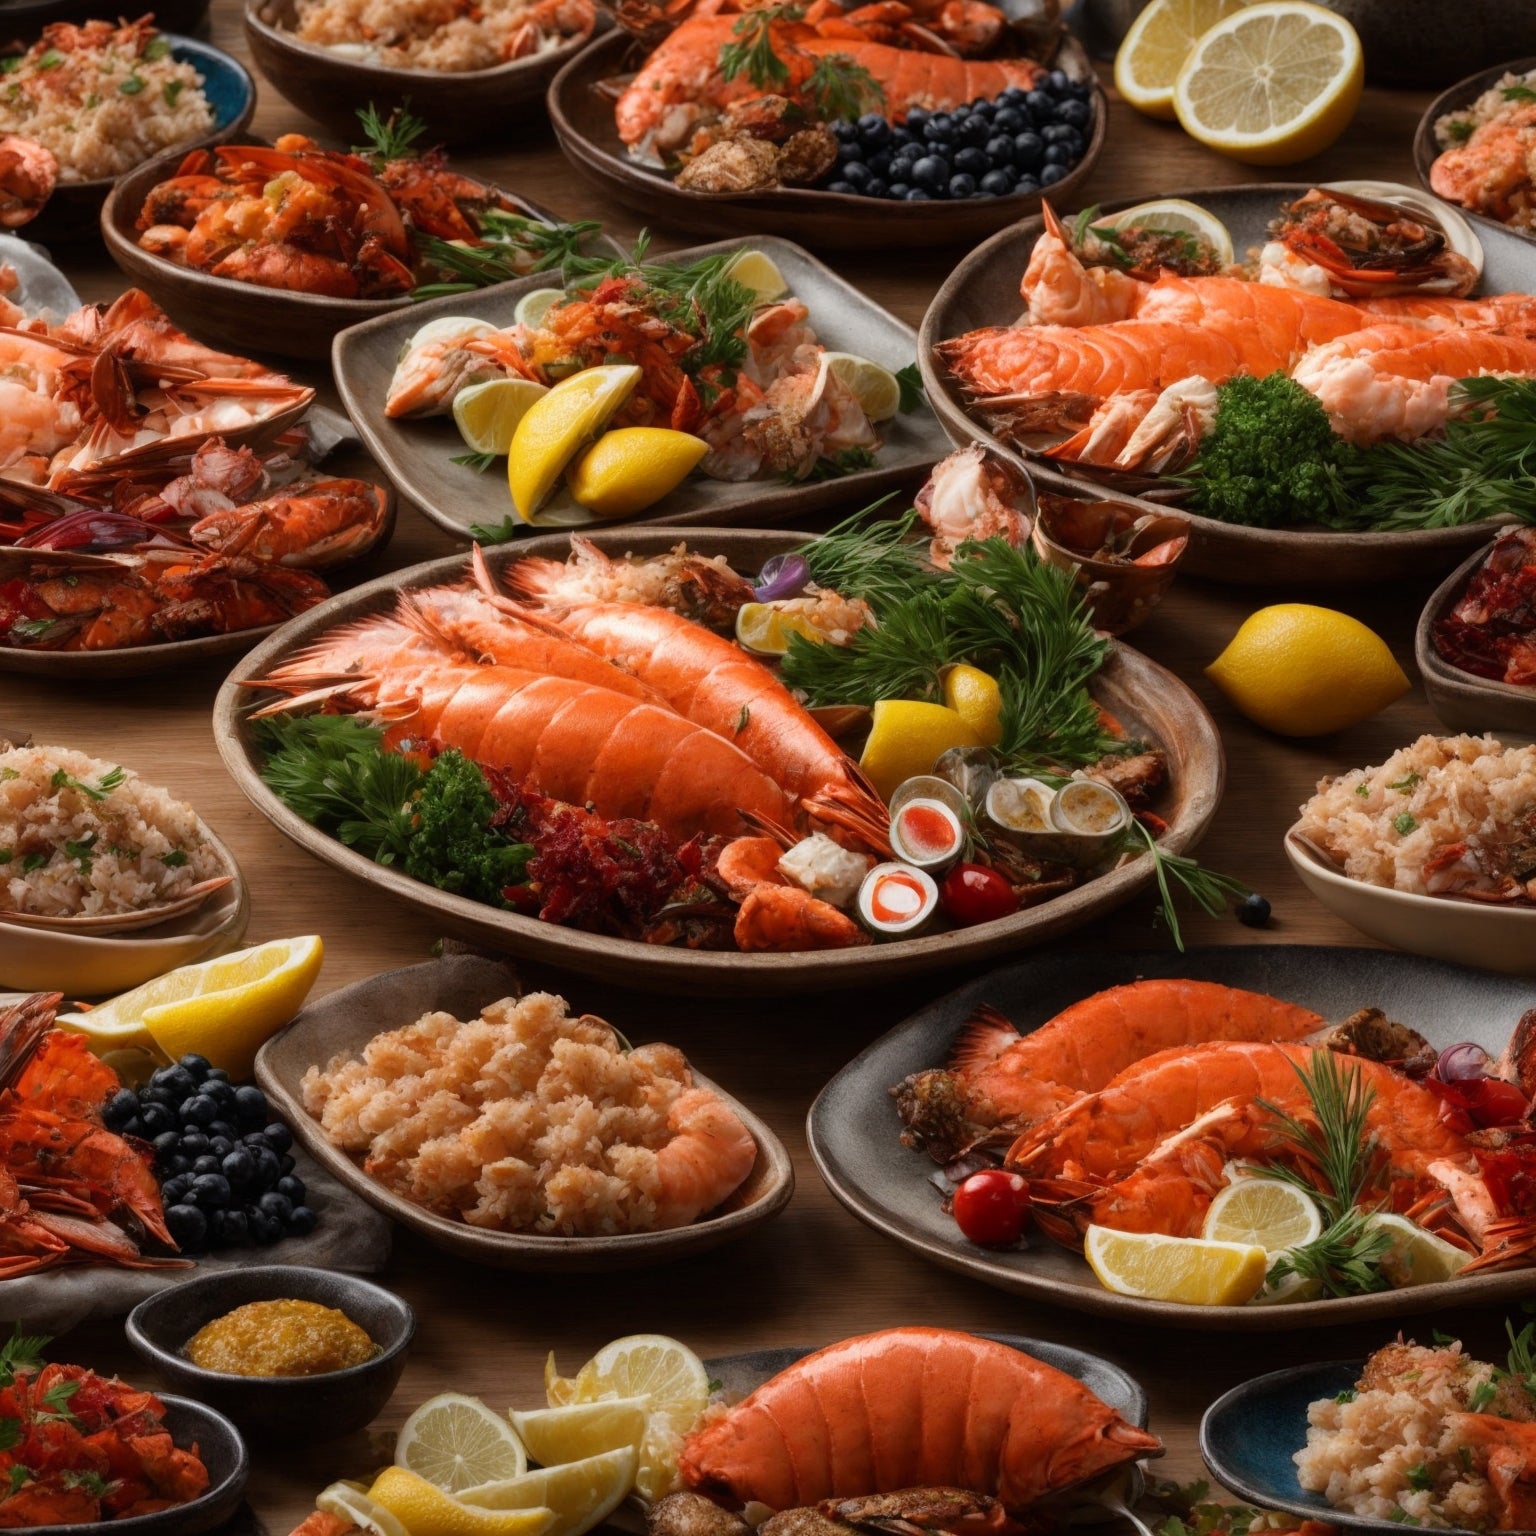 Epicurean Delight: Global Seafoods' Gourmet Seafood Platter Selection